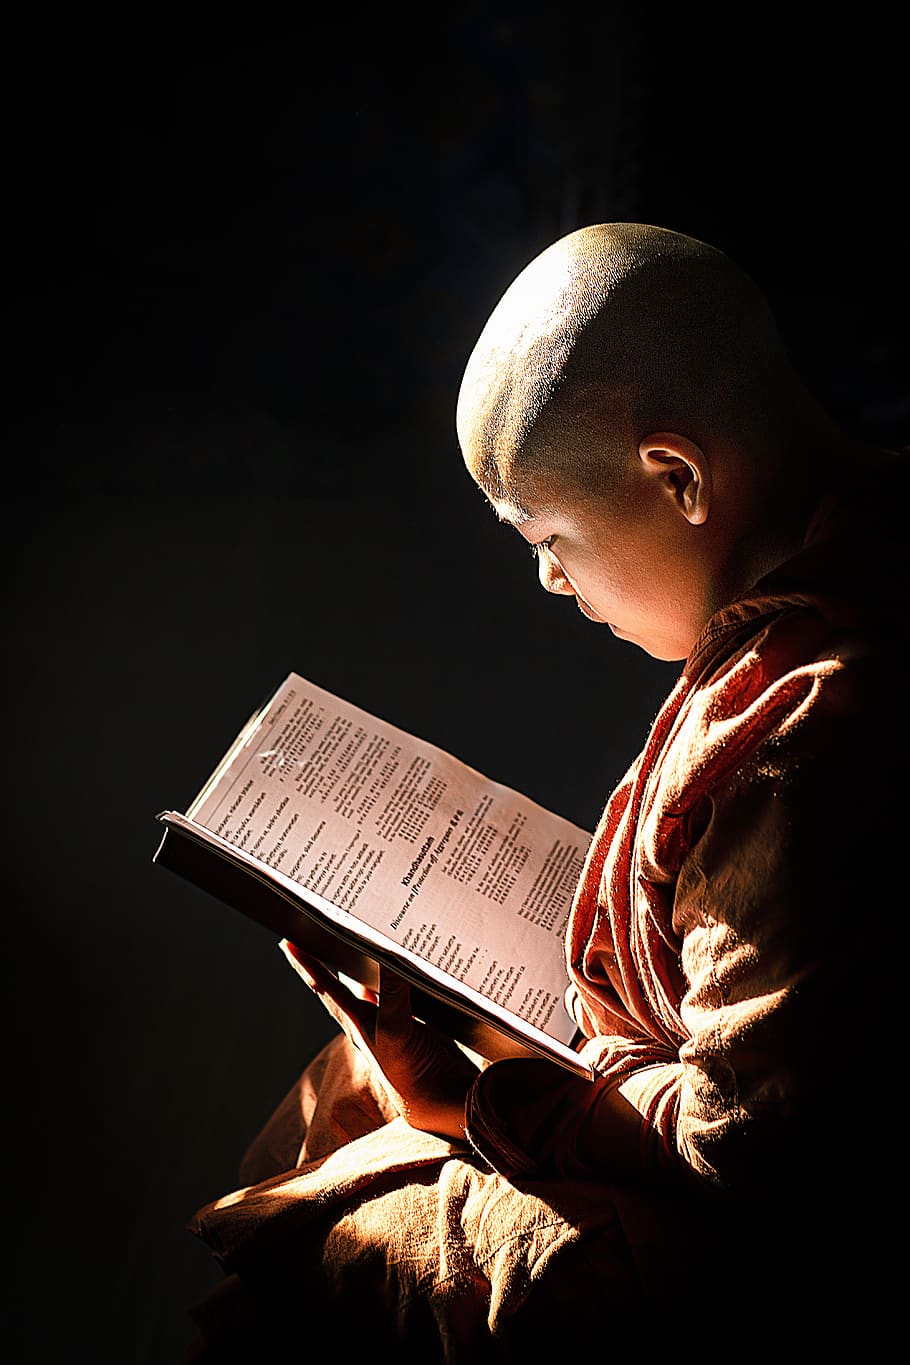 theravada buddhism, samanera, novice, buddhist, monastery, reading, monk, people, chanting, faith